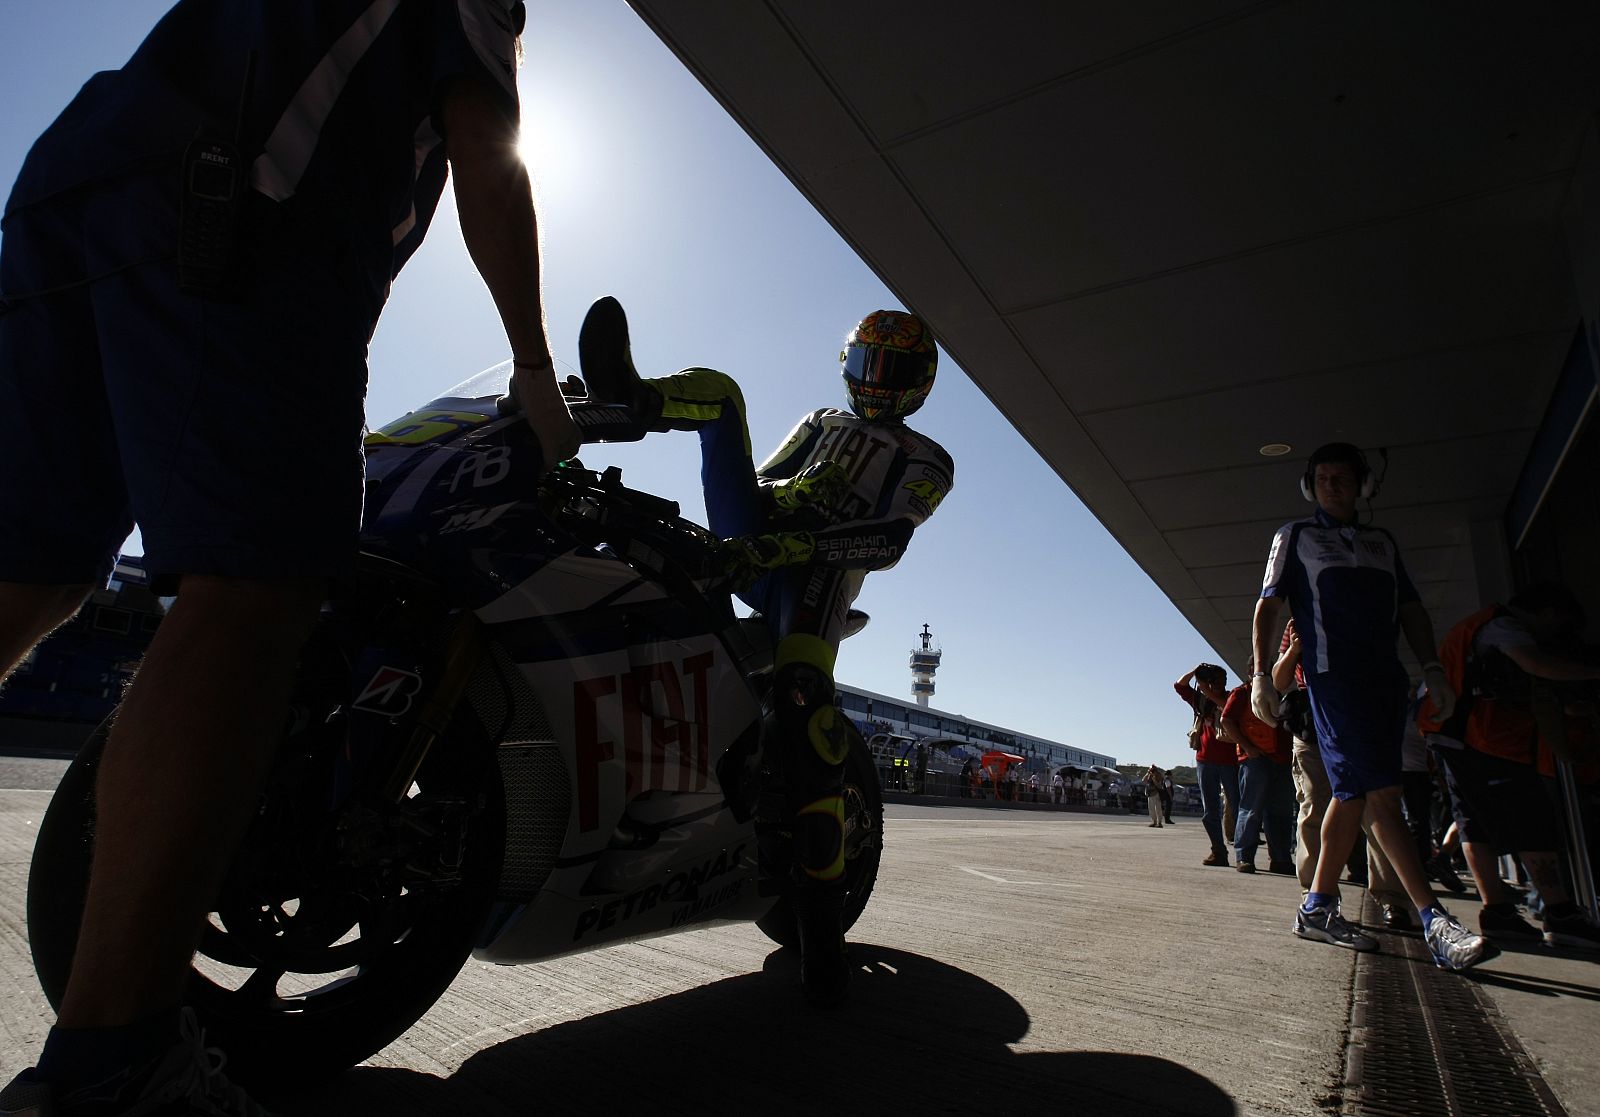 Yamaha busca a un piloto capaz de sustituir a Valentino Rossi.